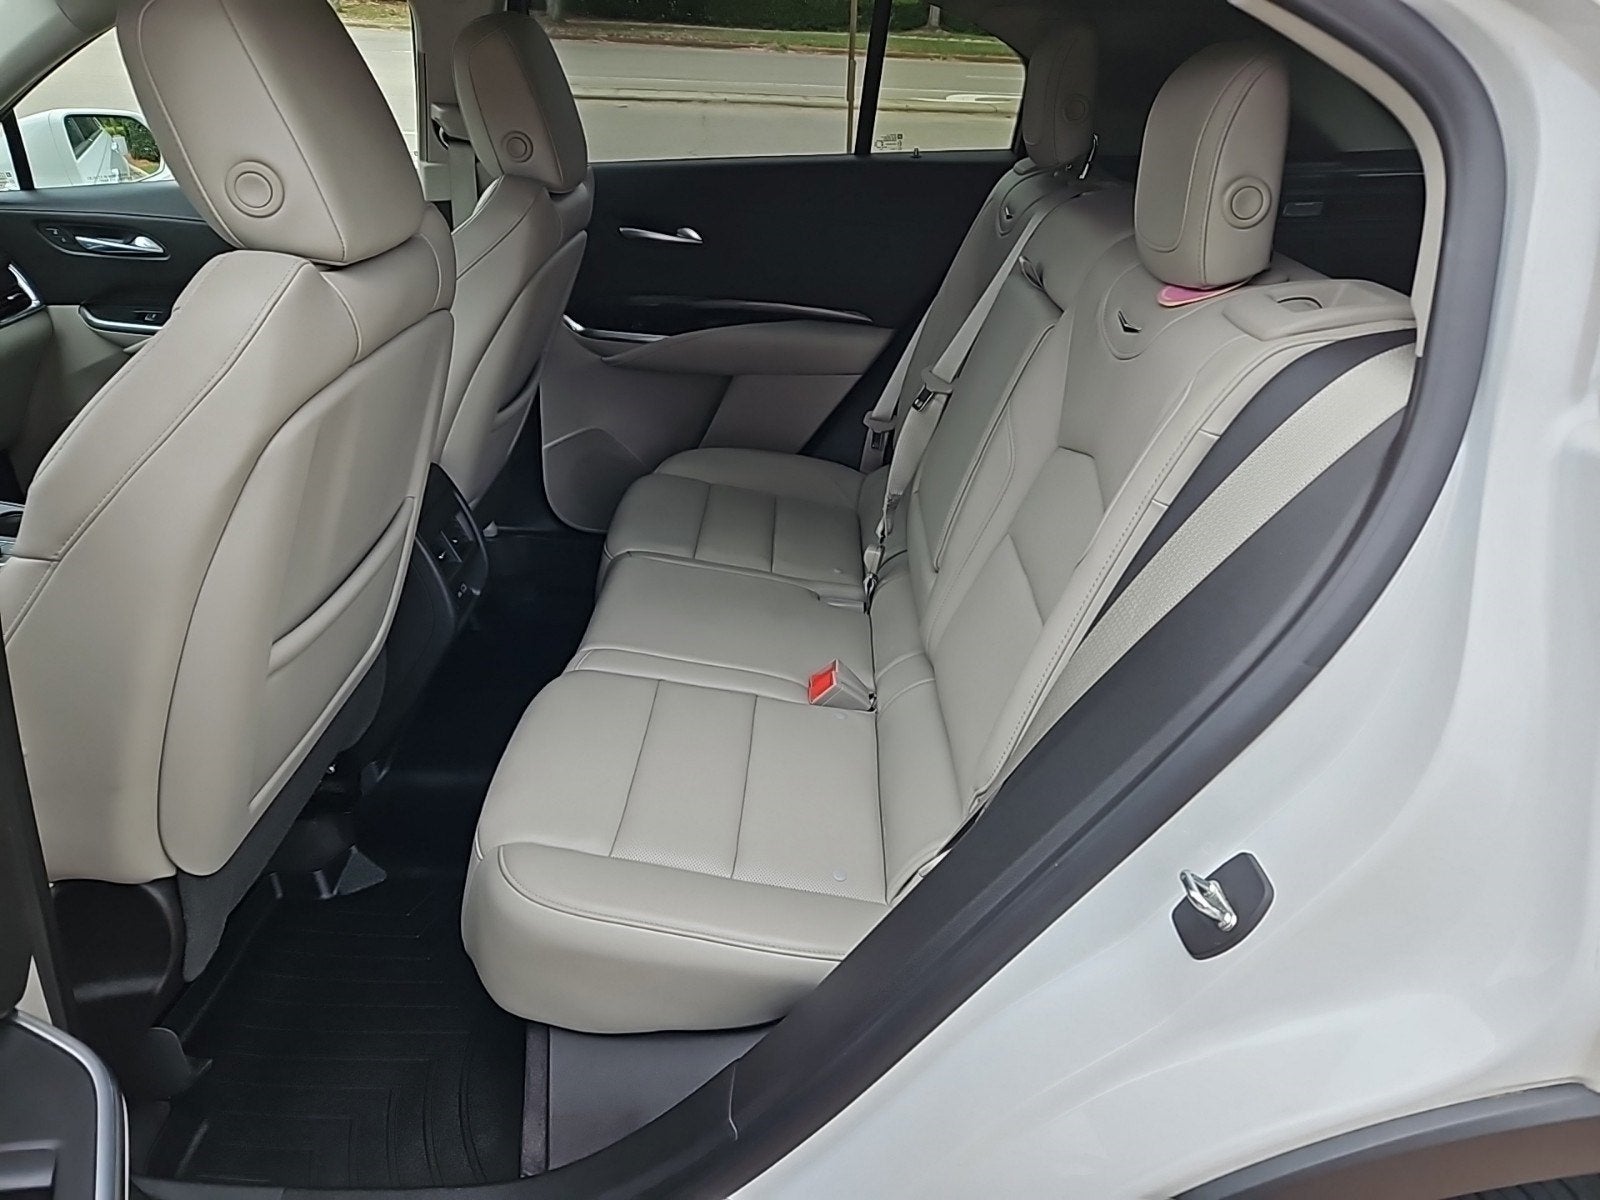 2019 Cadillac XT4 FWD Premium Luxury